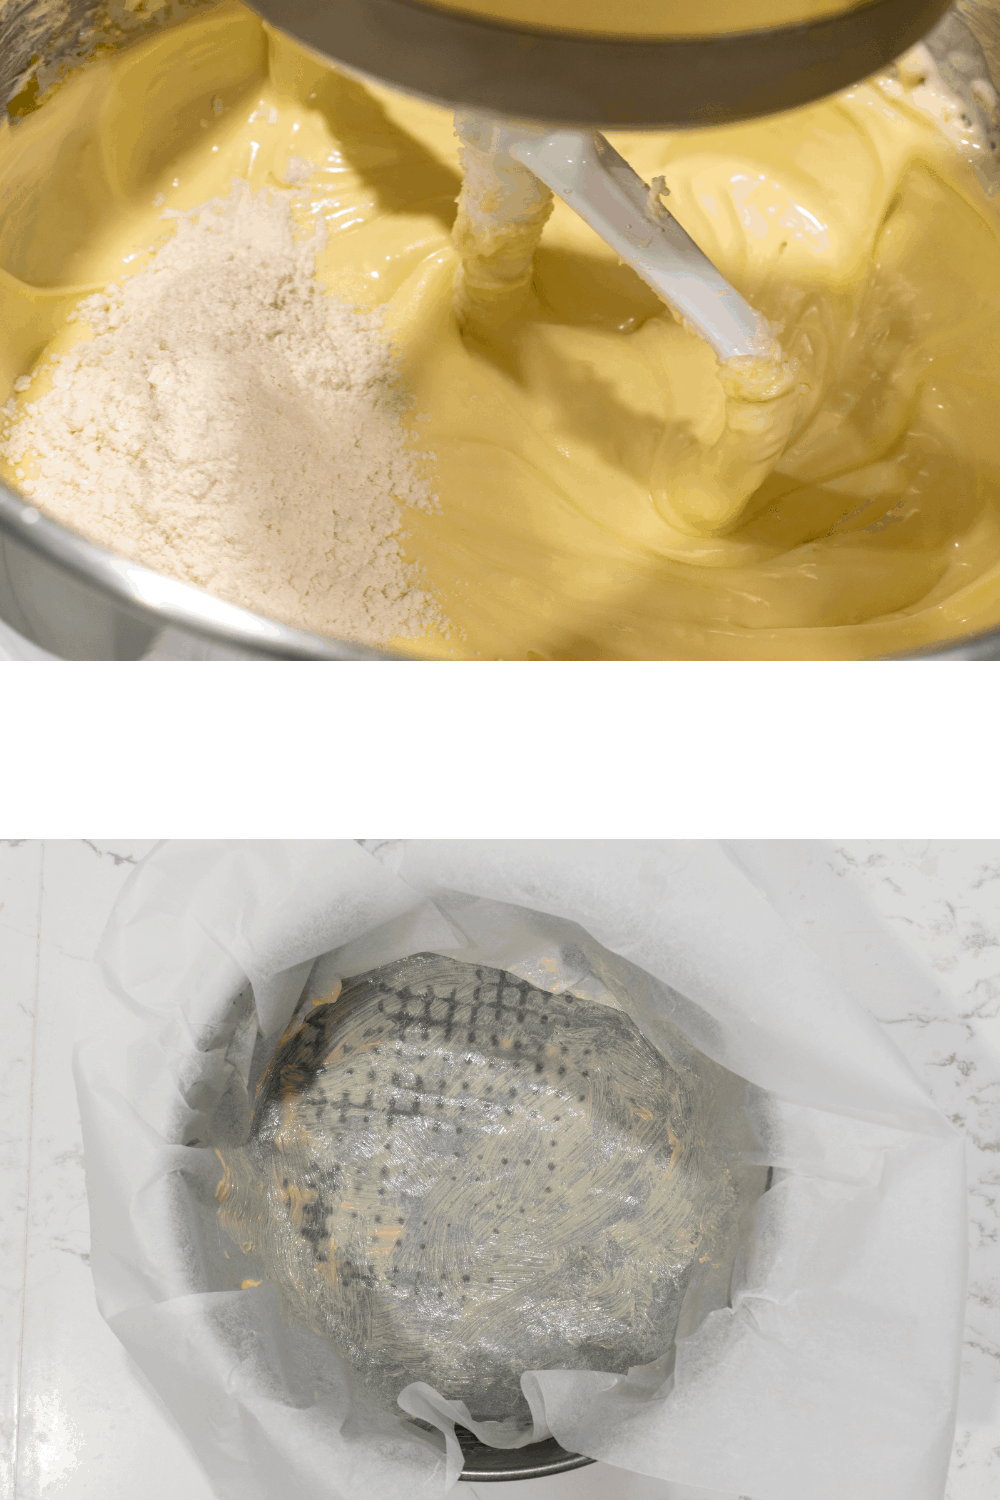 Making the burnt cheesecake